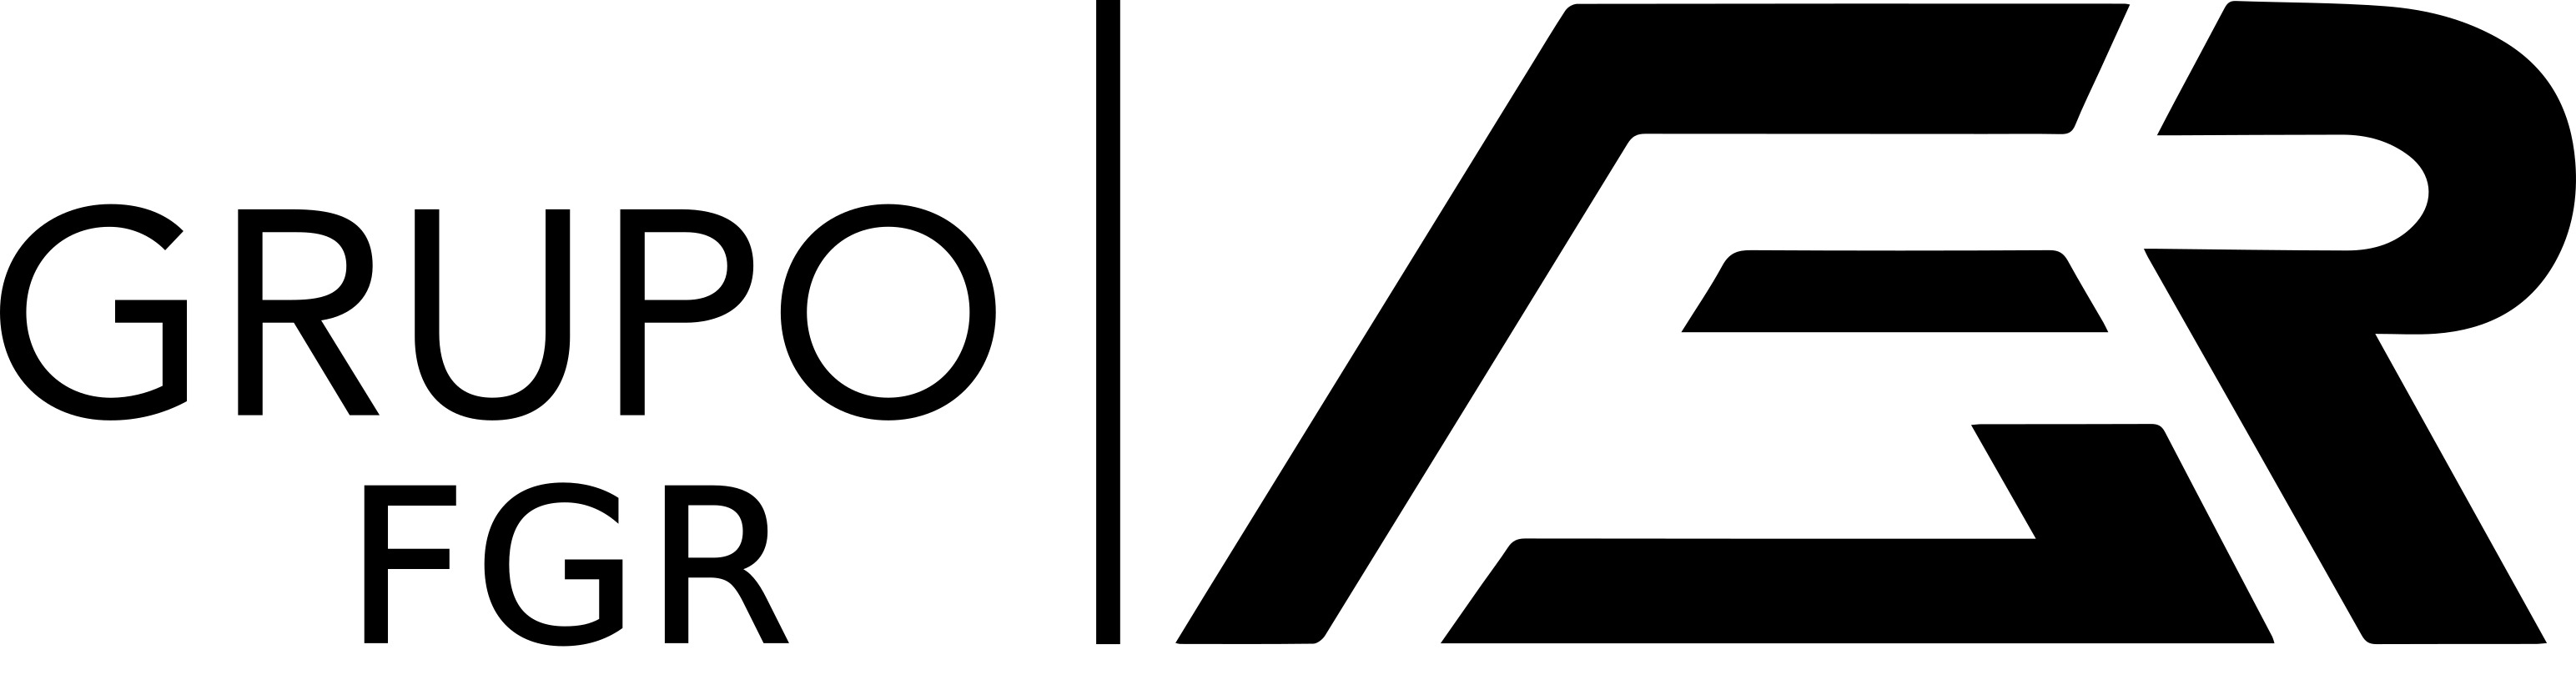 FGR Proyectos - logo